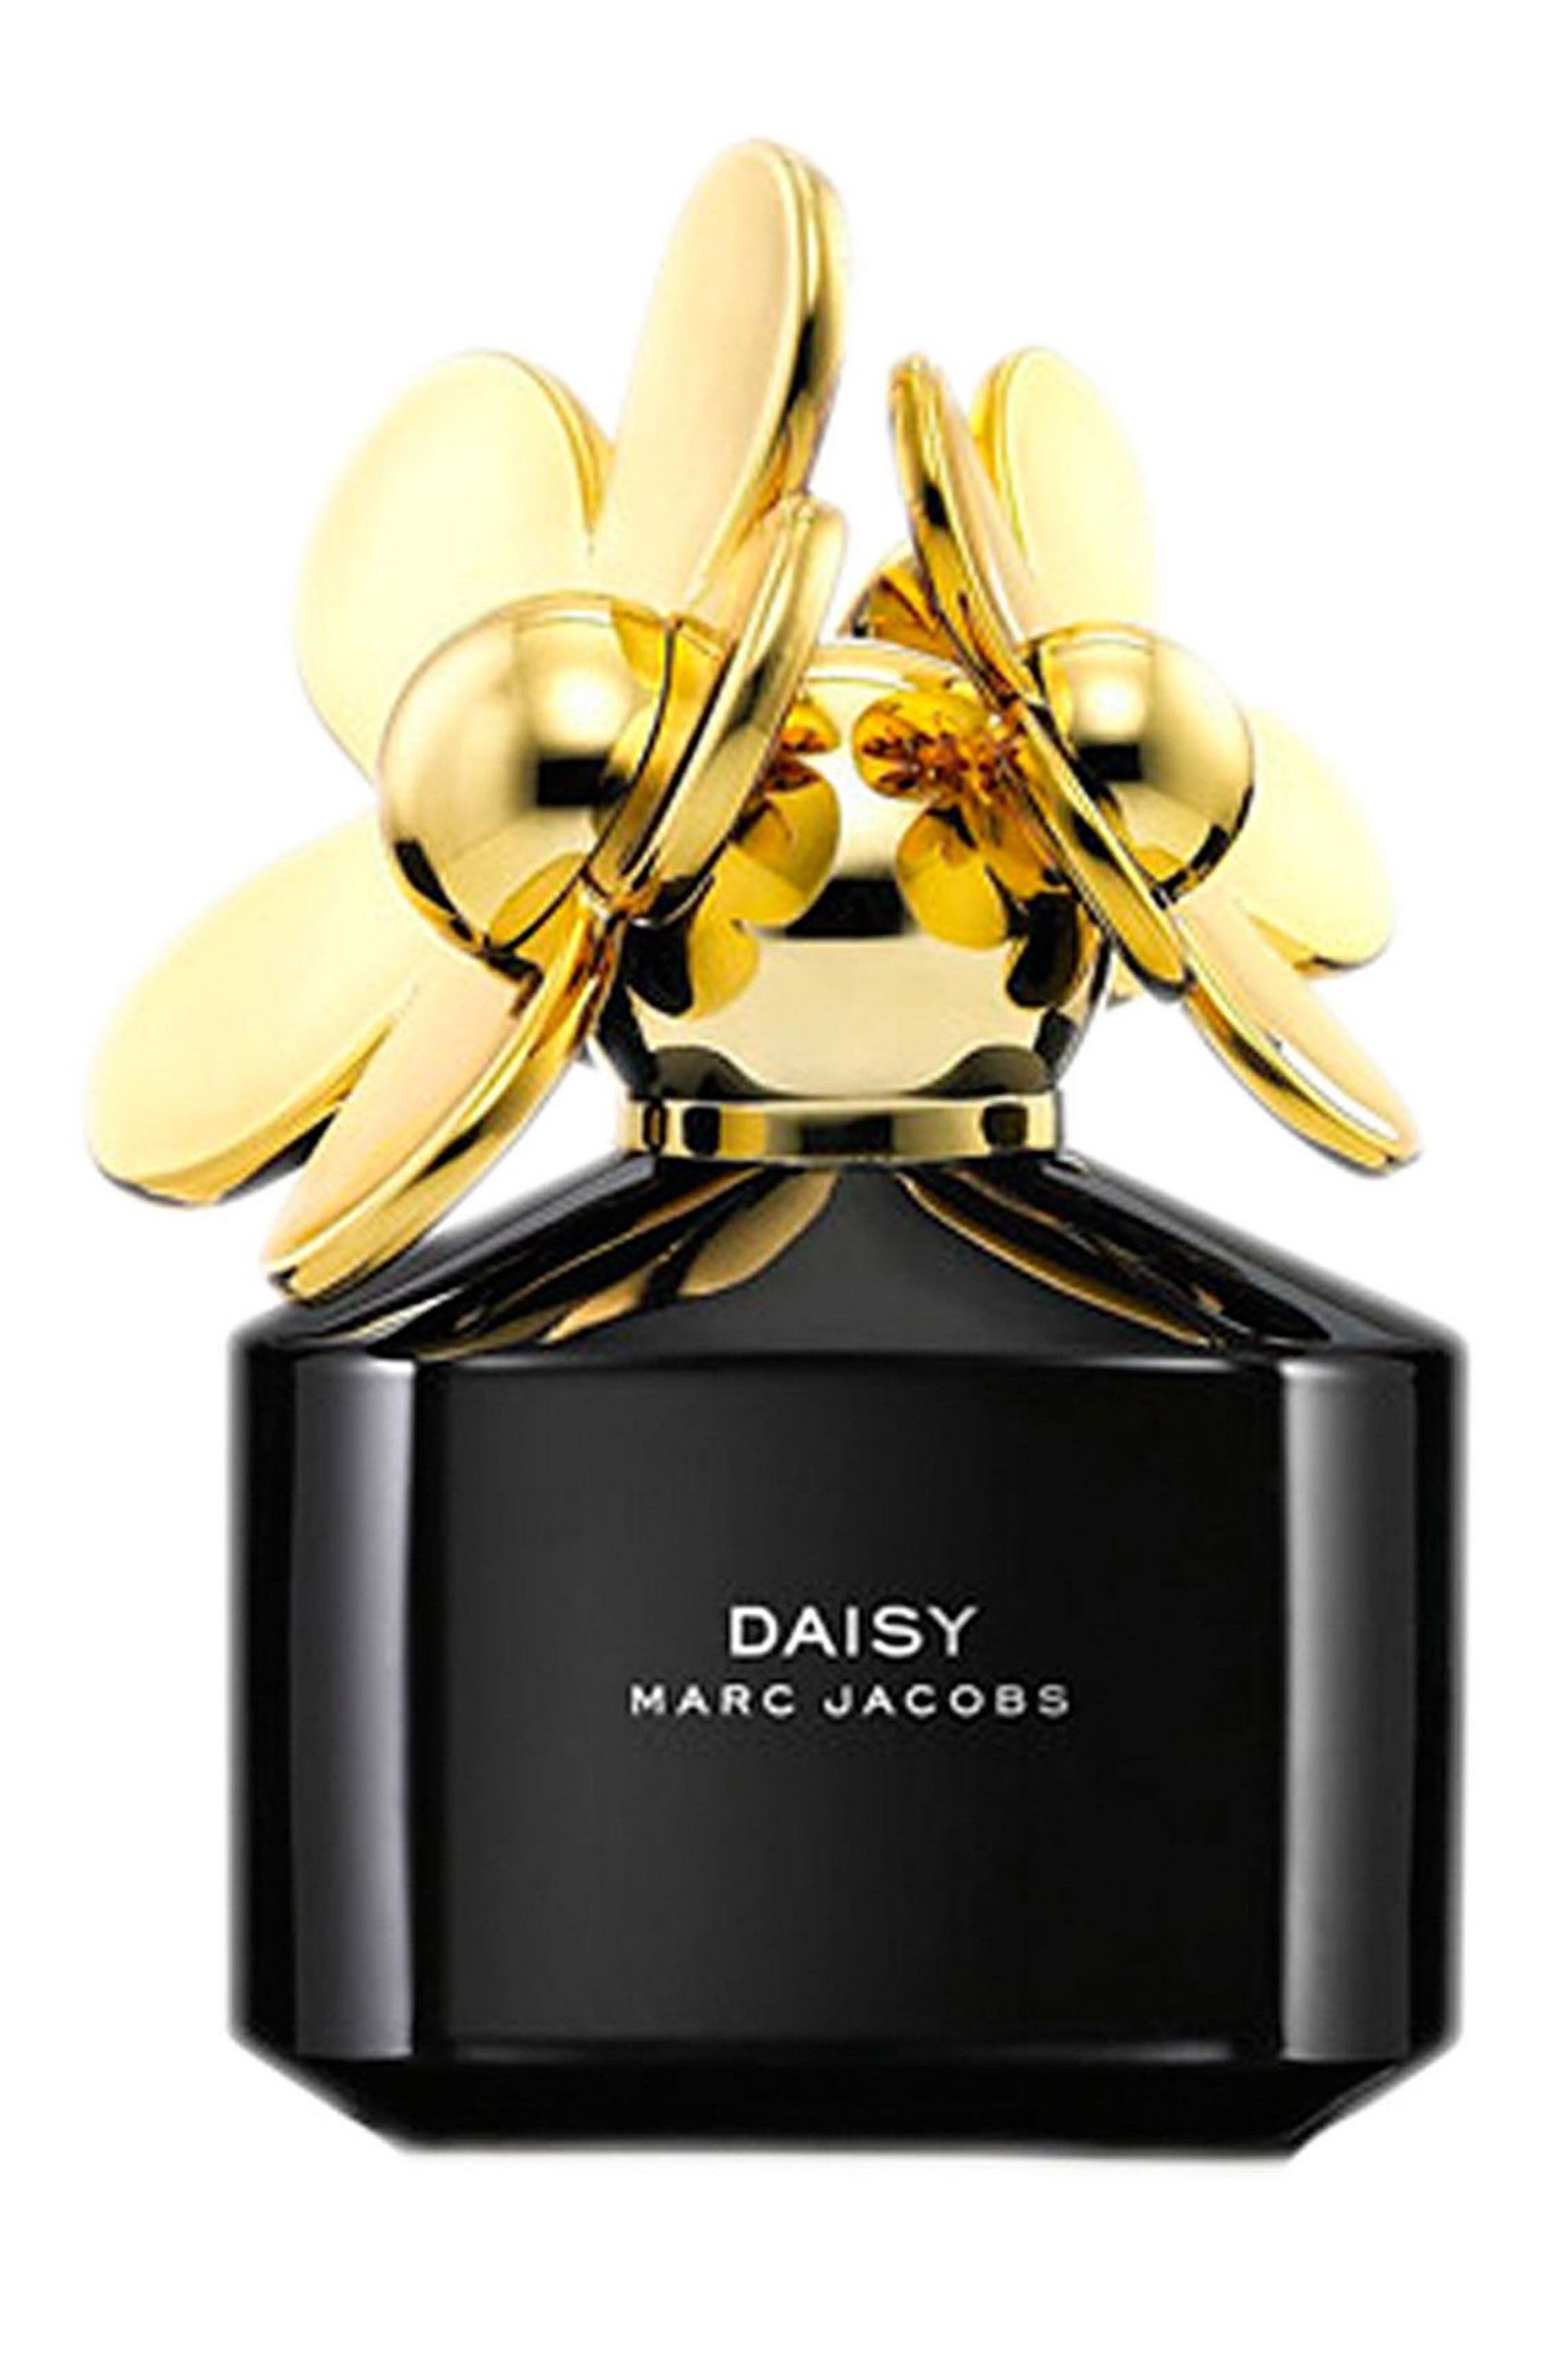 MARC JACOBS 'Daisy' Eau de Parfum Spray Nordstrom